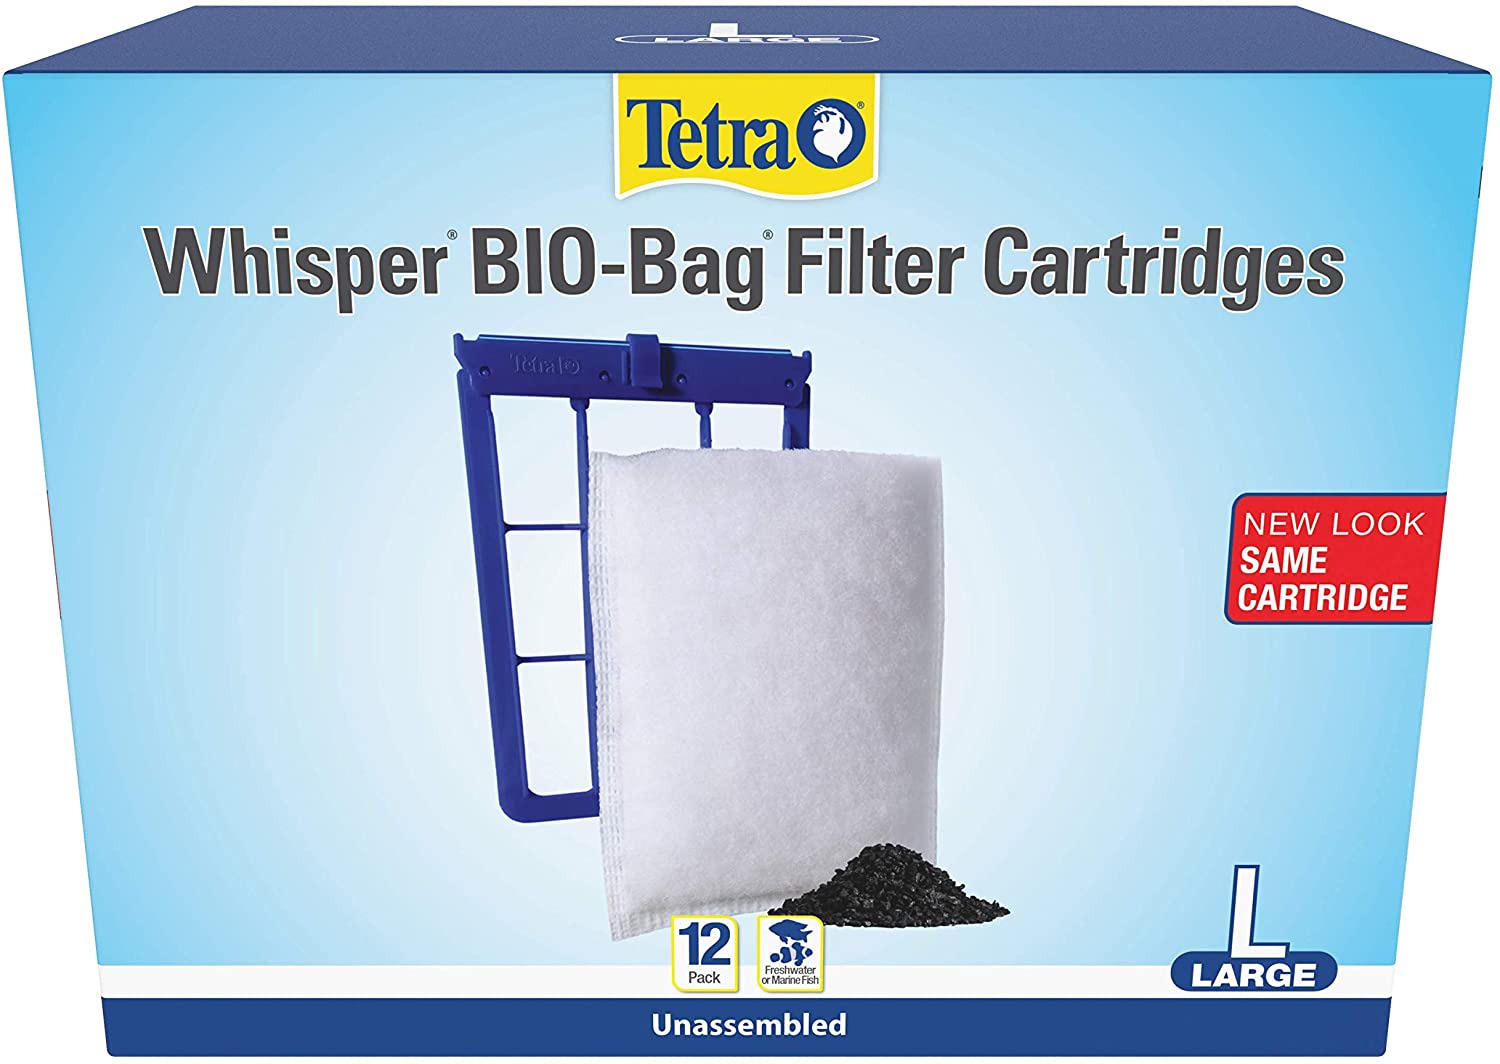 Tetra Whisper Bio-Bag Disposable Filter Cartridges Unassembled Large 12-Pack